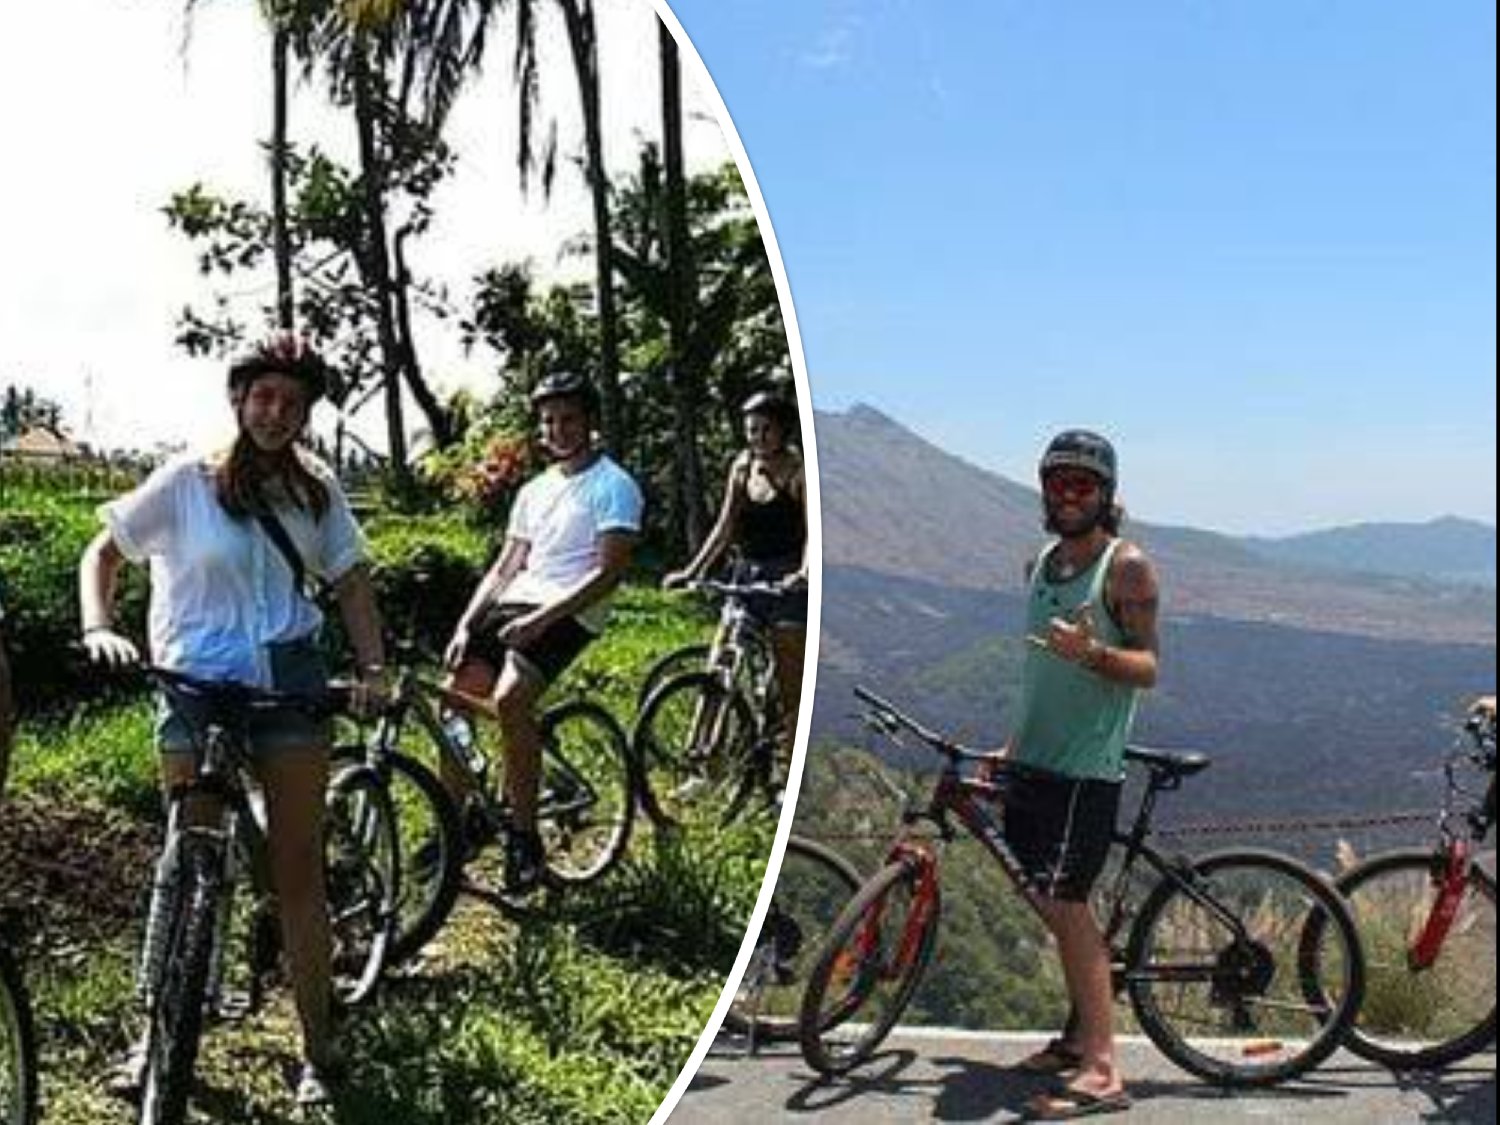 Bali Mount Bike Adventure